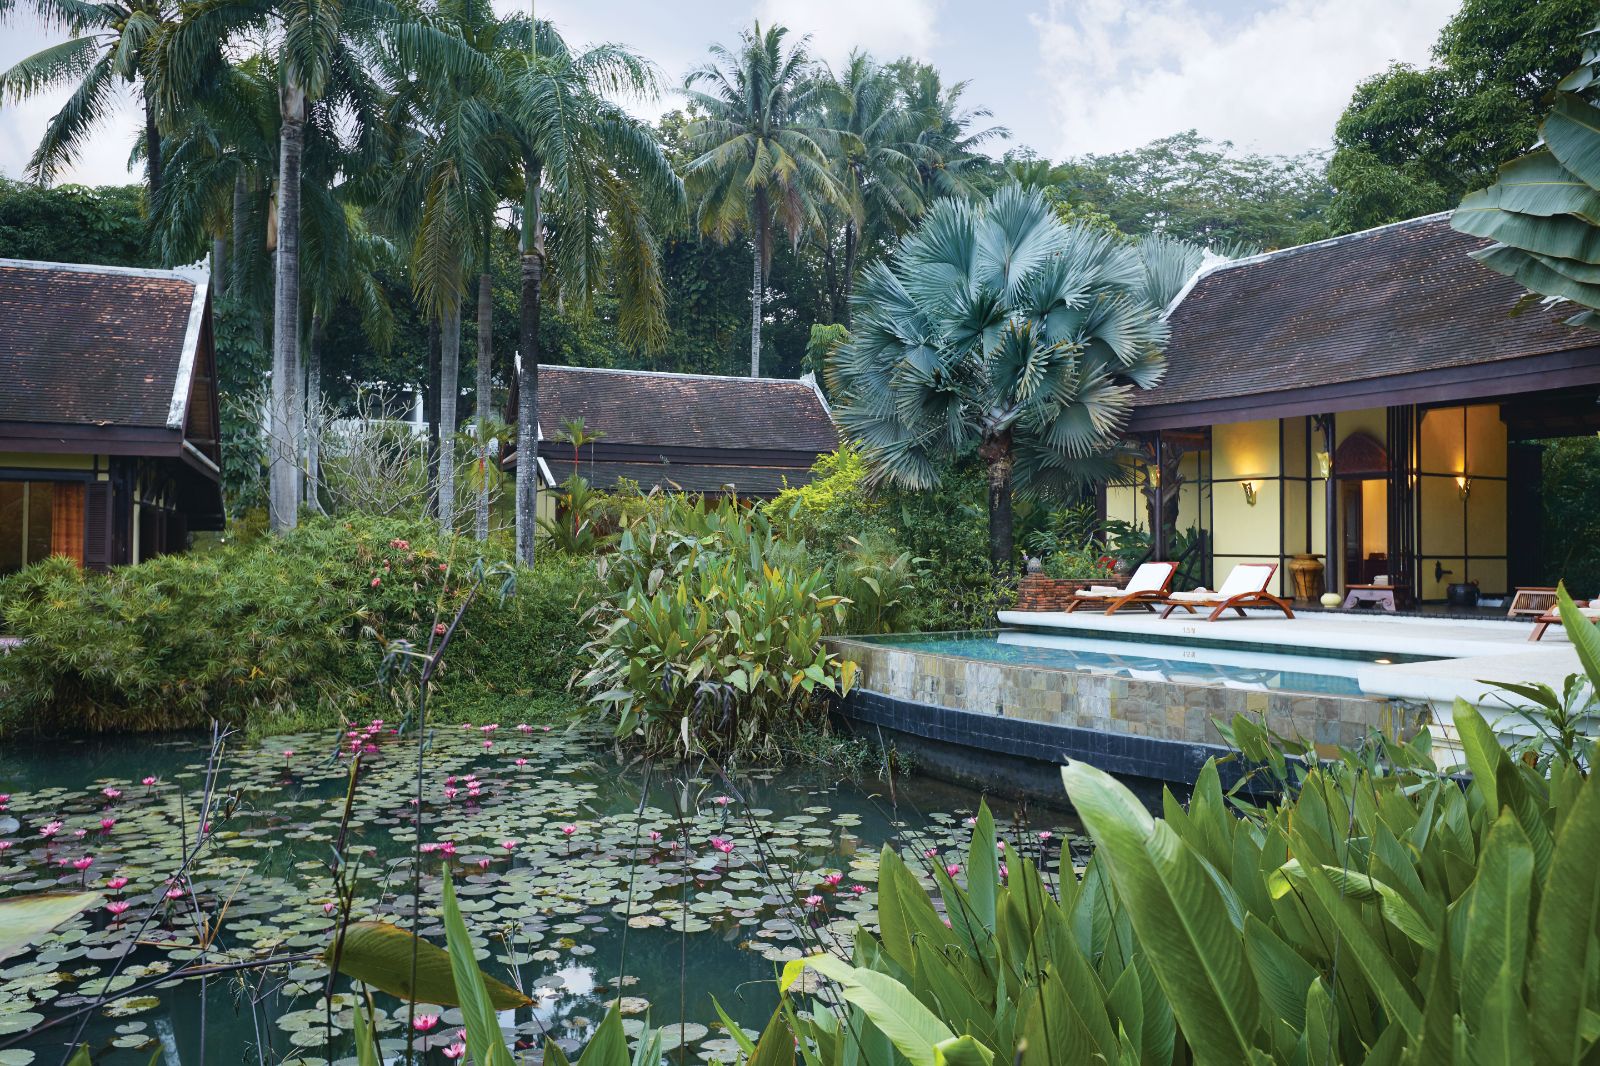 Guest villa overlooking pond at La Residence Phao Vao in Luang Prabang, Laos